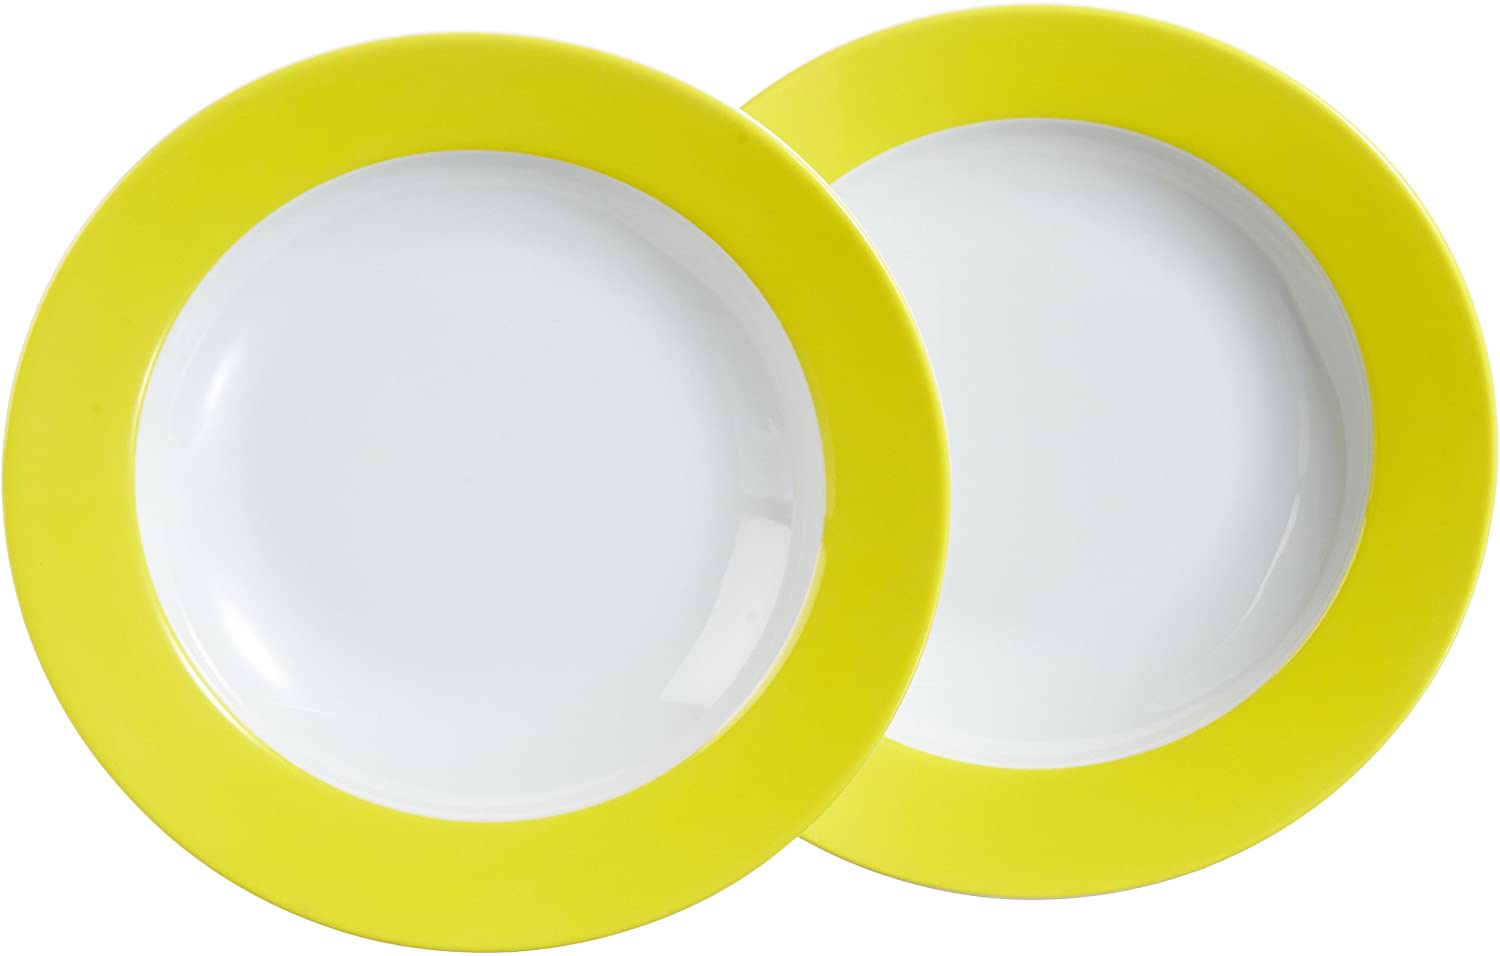 Kahla Pronto 57E149A70412C Soup Plate Set of 2 Lemon Yellow